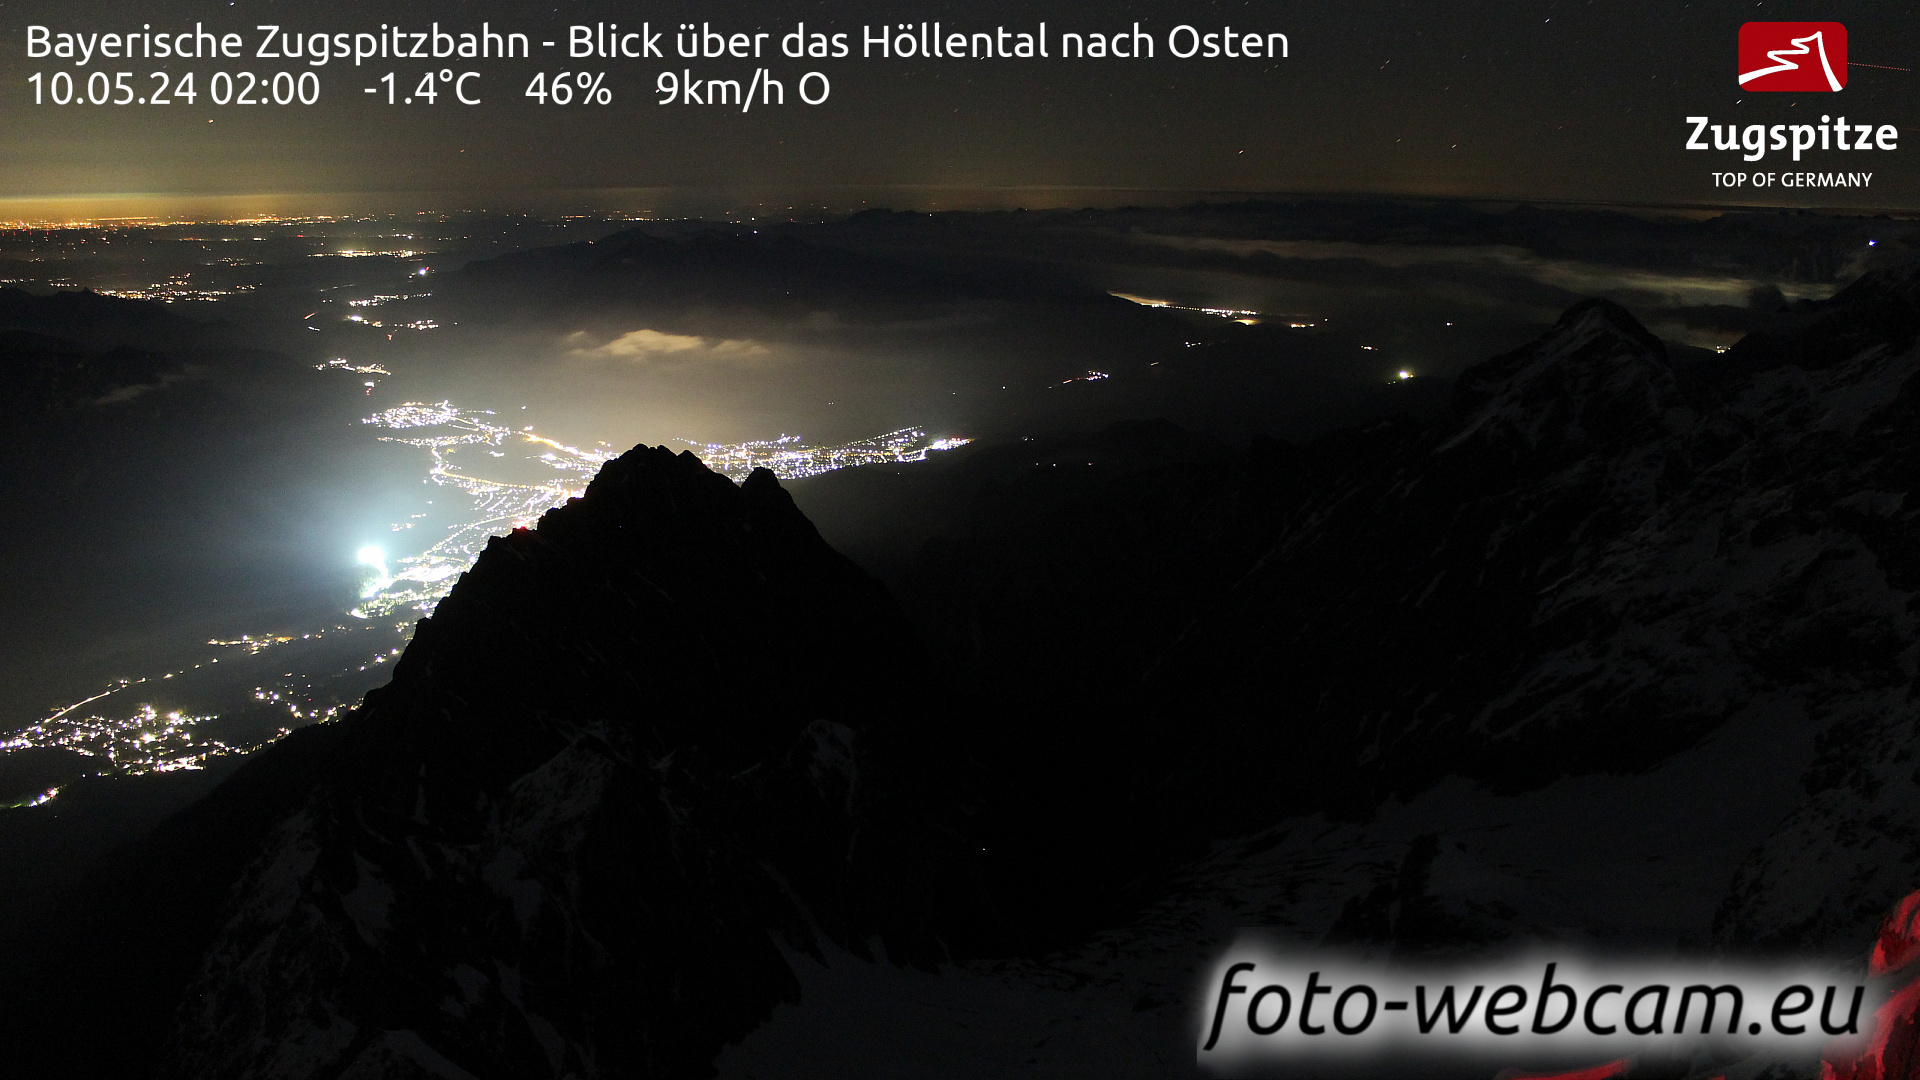 Zugspitze Lu. 02:05